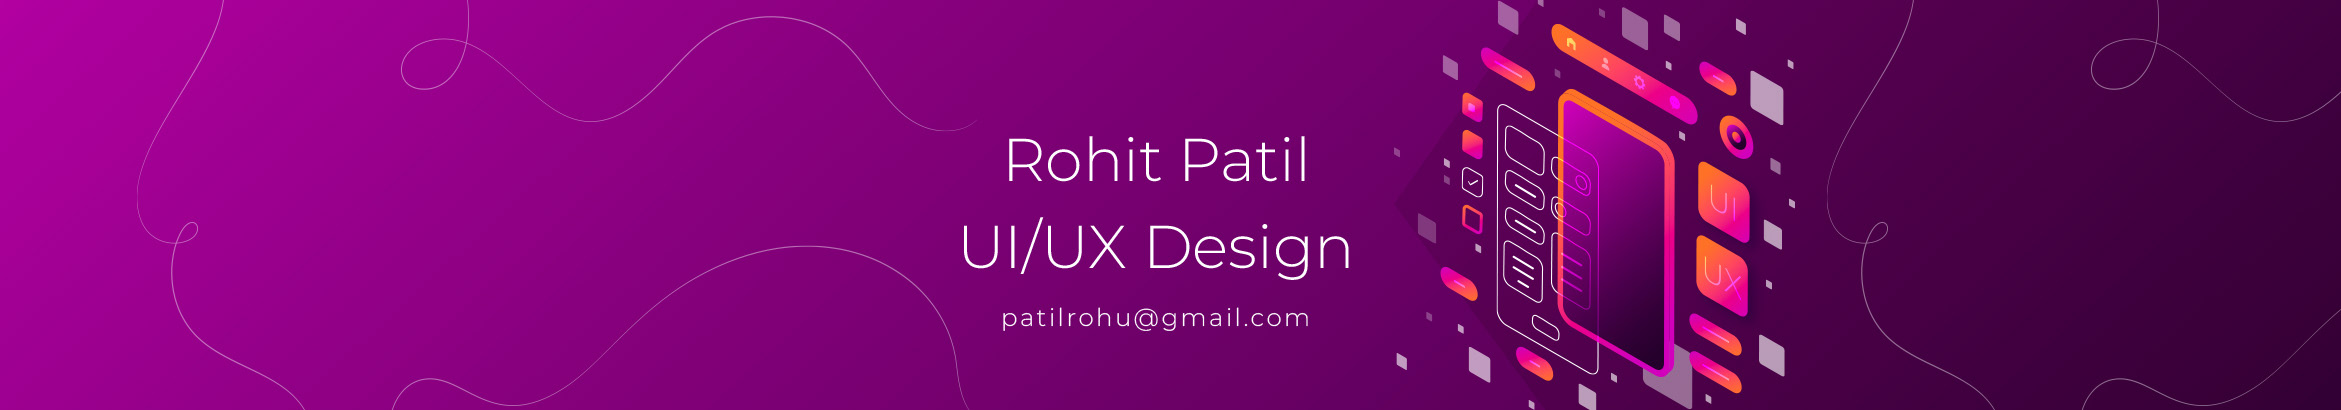 Баннер профиля Rohit Patil